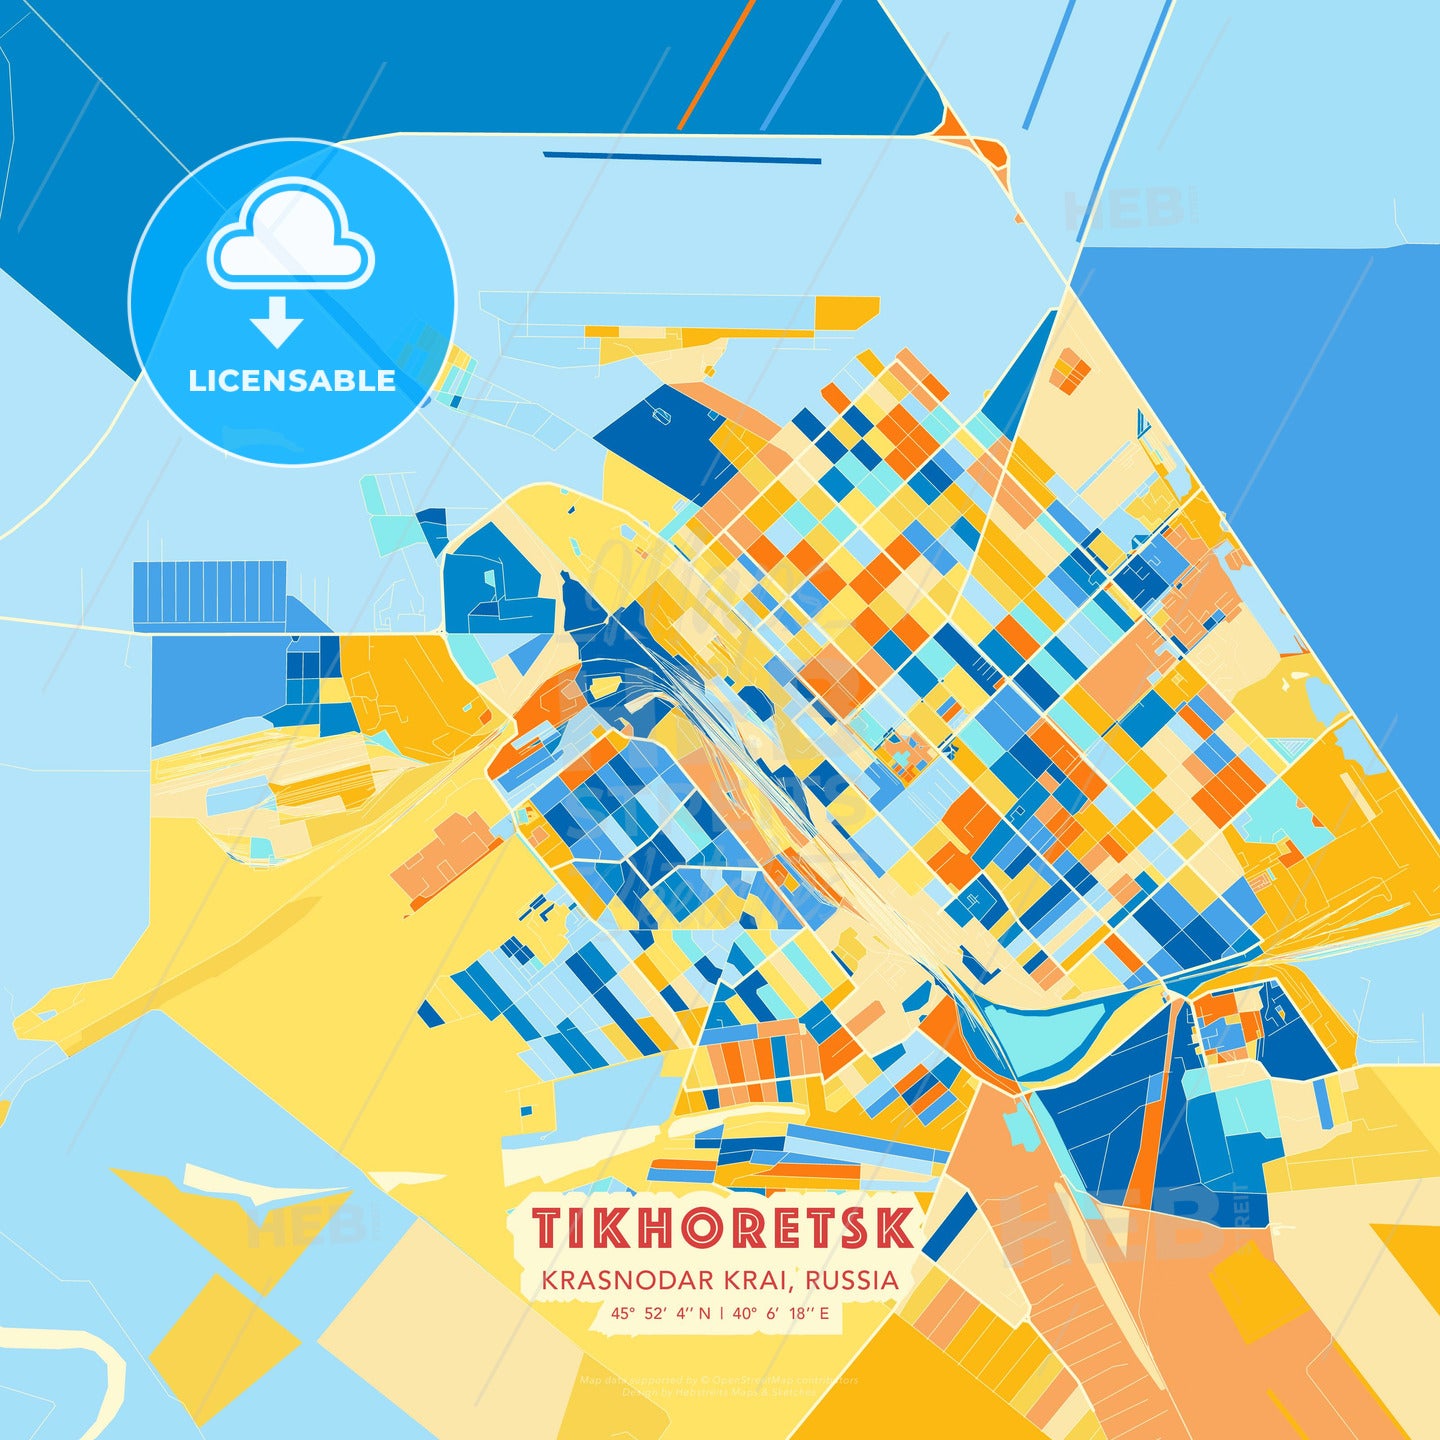 Tikhoretsk, Krasnodar Krai, Russia, map - HEBSTREITS Sketches